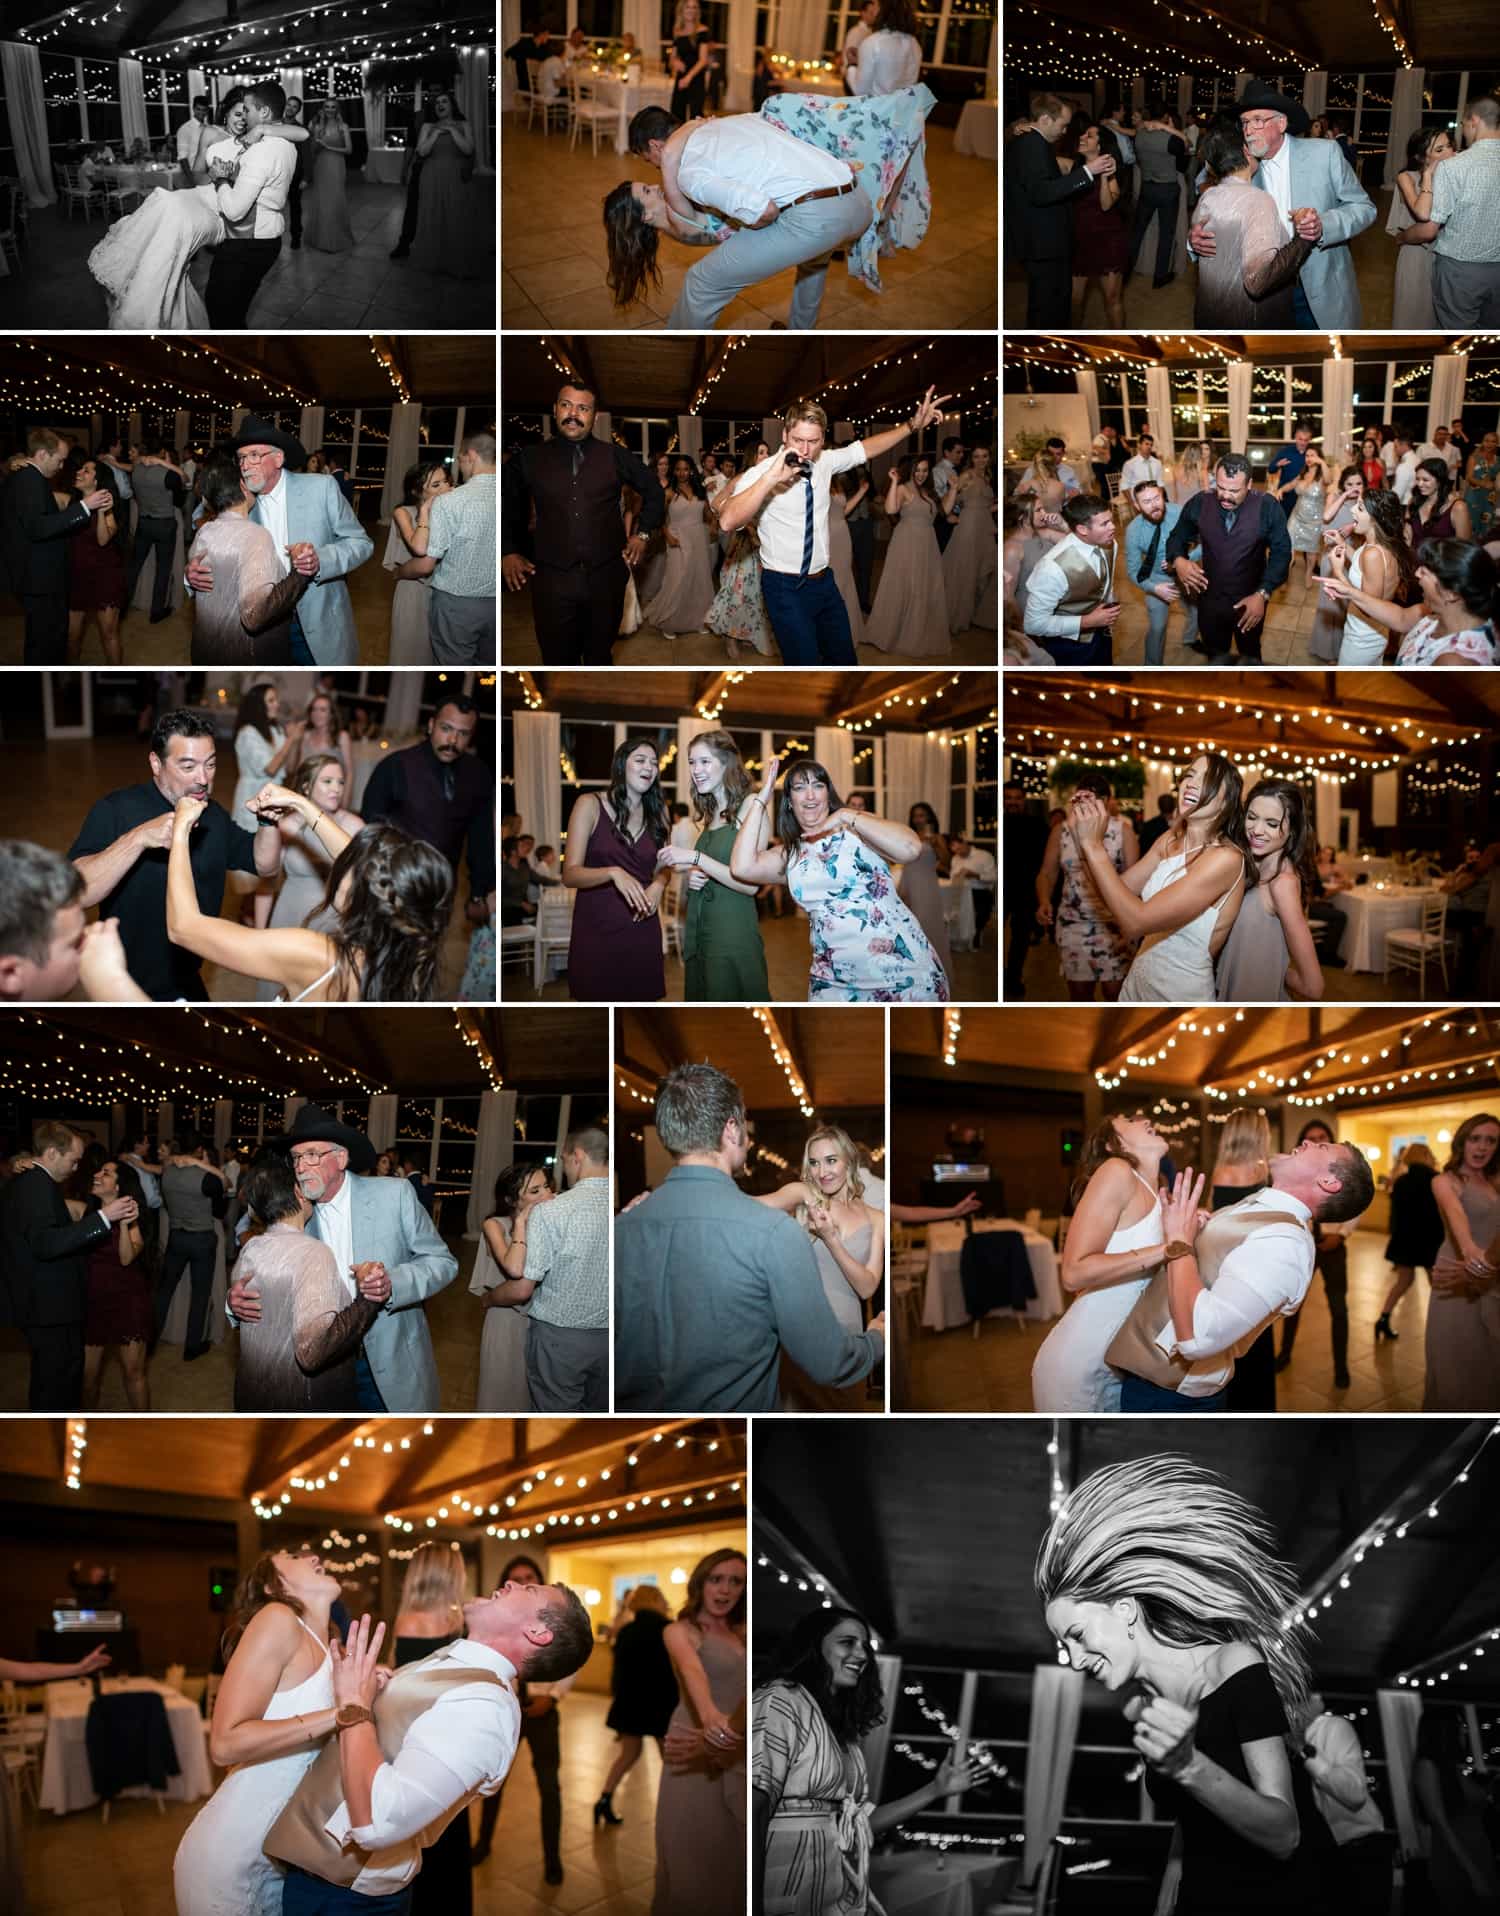 Wedding guests dancing at Cordiano Winery.